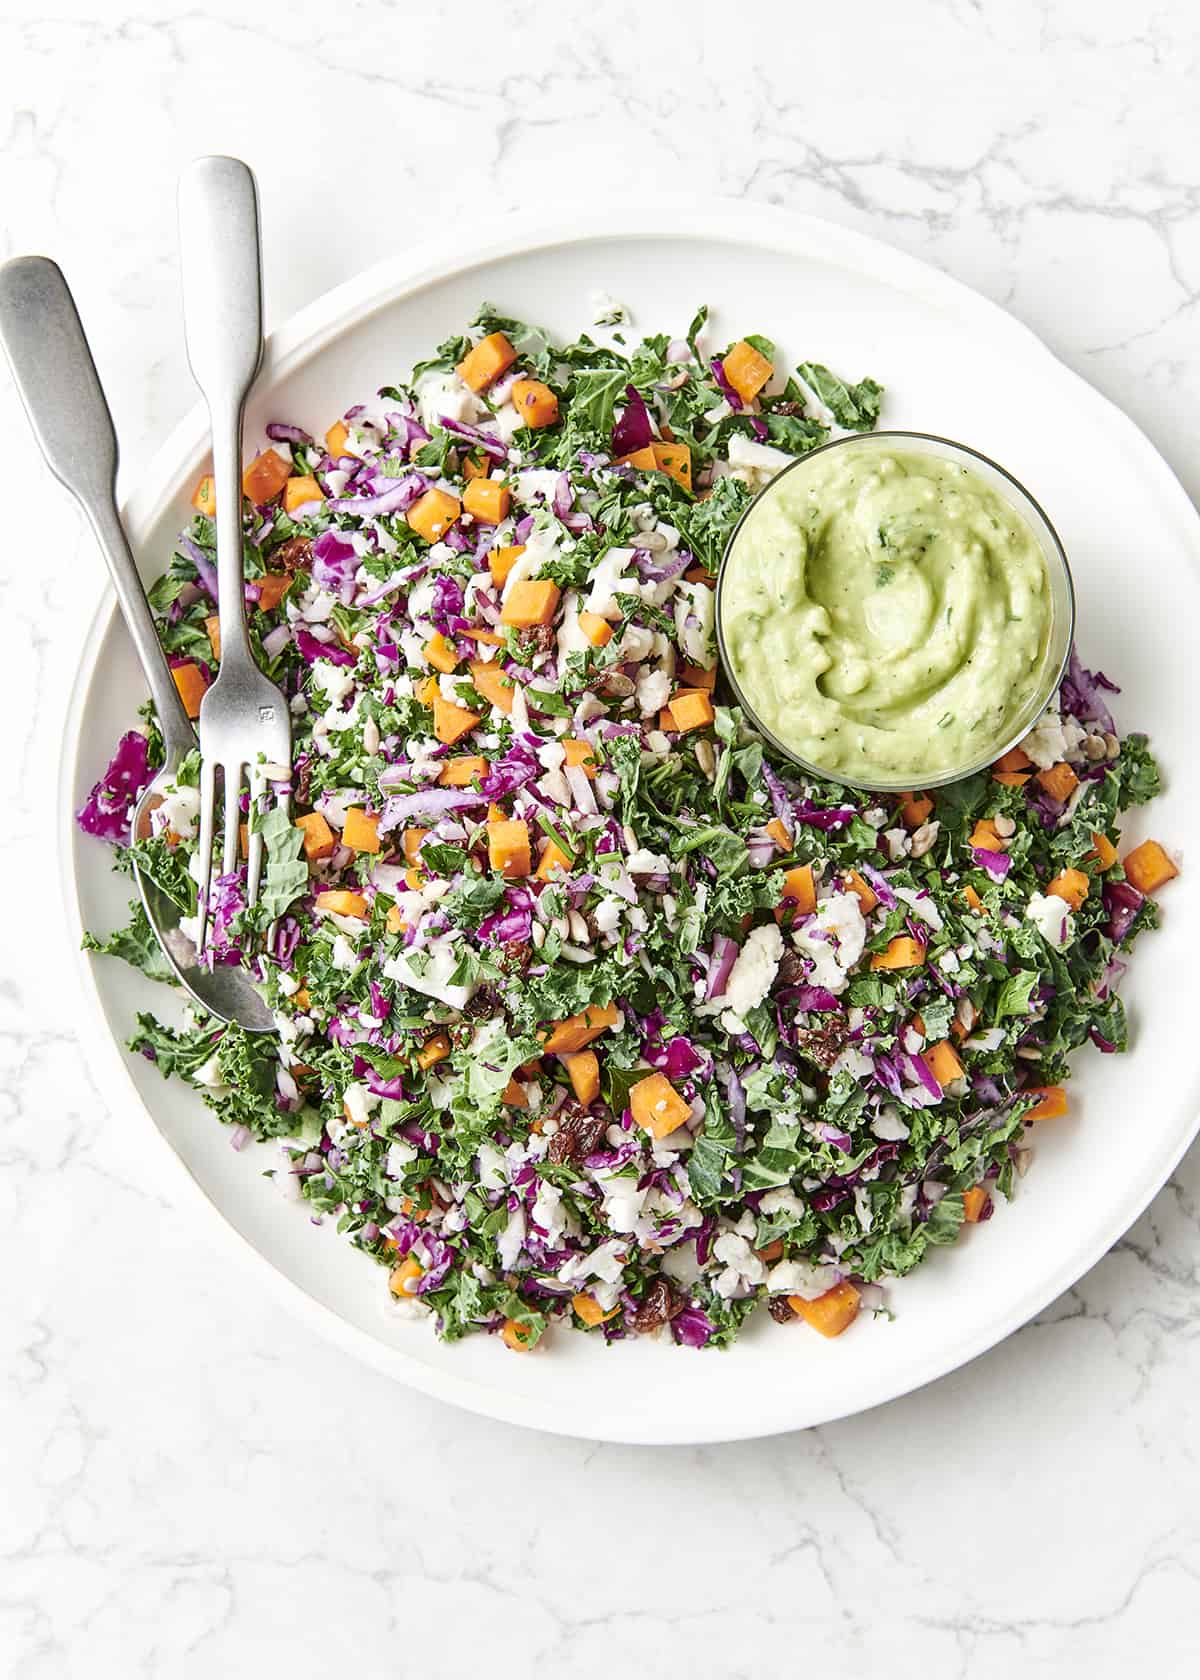 https://www.theblendergirl.com/wp-content/uploads/2019/03/Vegan-Chopped-Salad-with-Avocado-Dressing.jpg